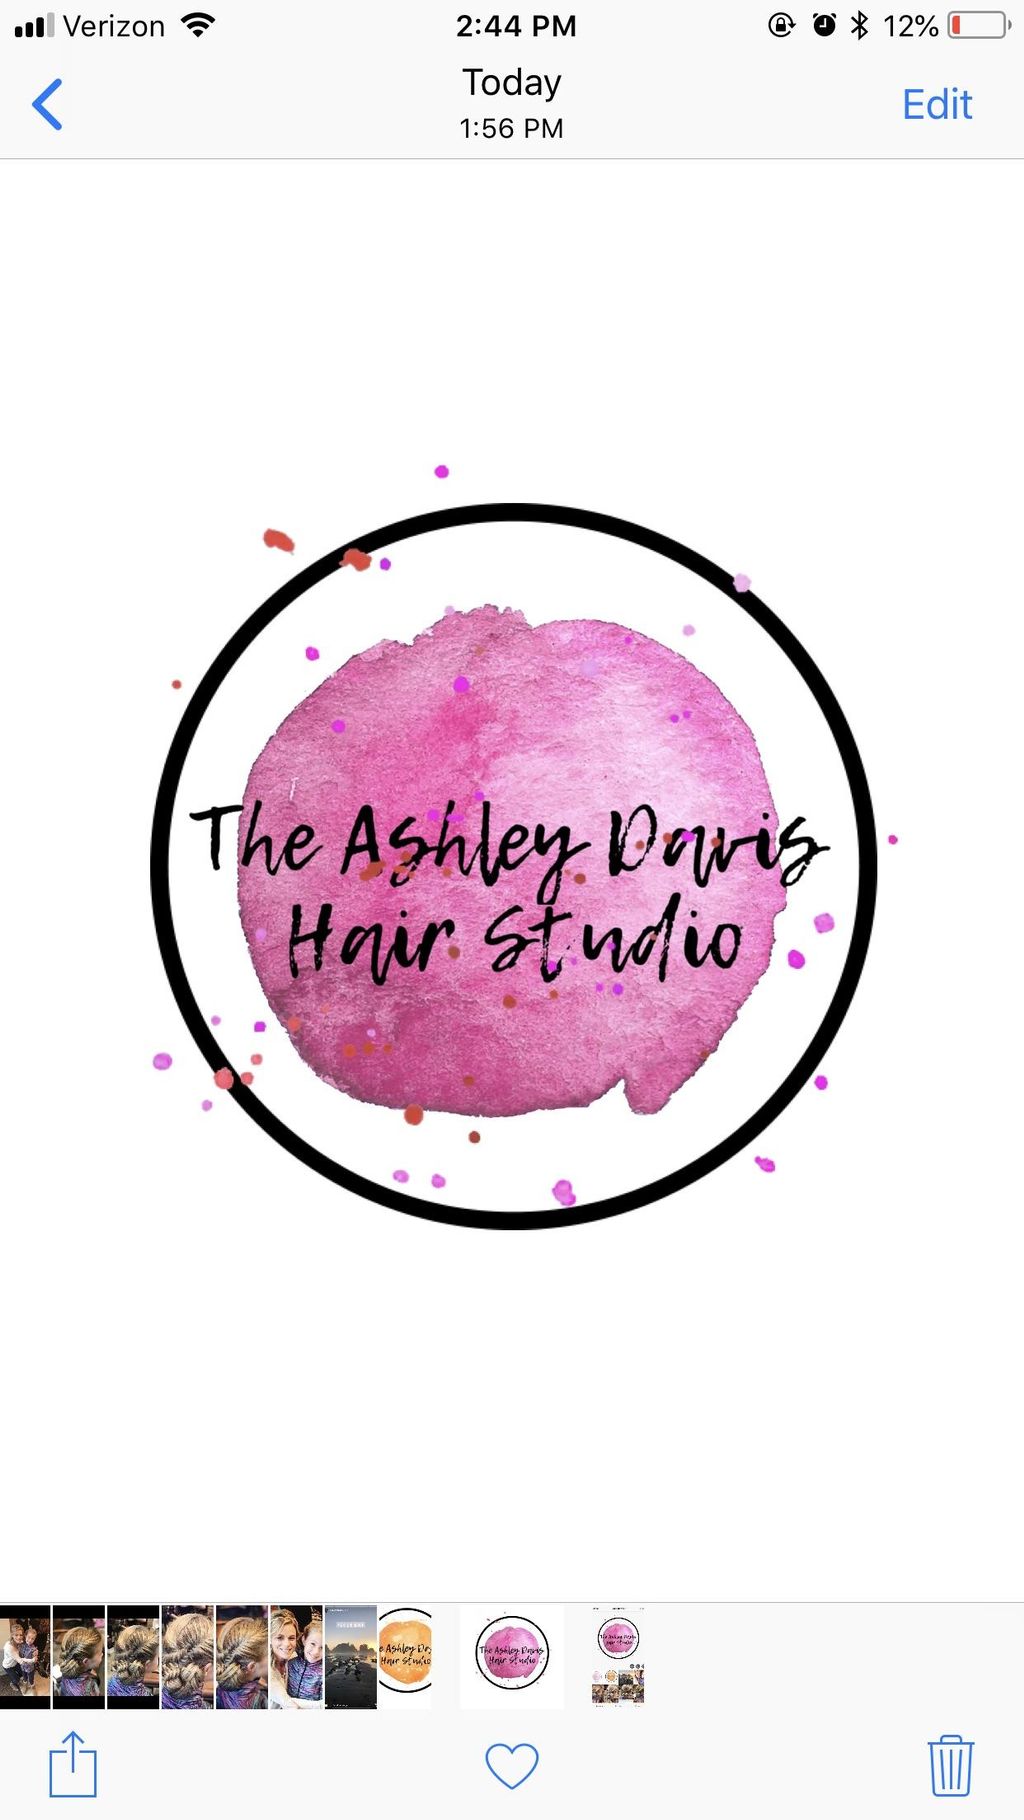 The Ashley Davis Hair Studio